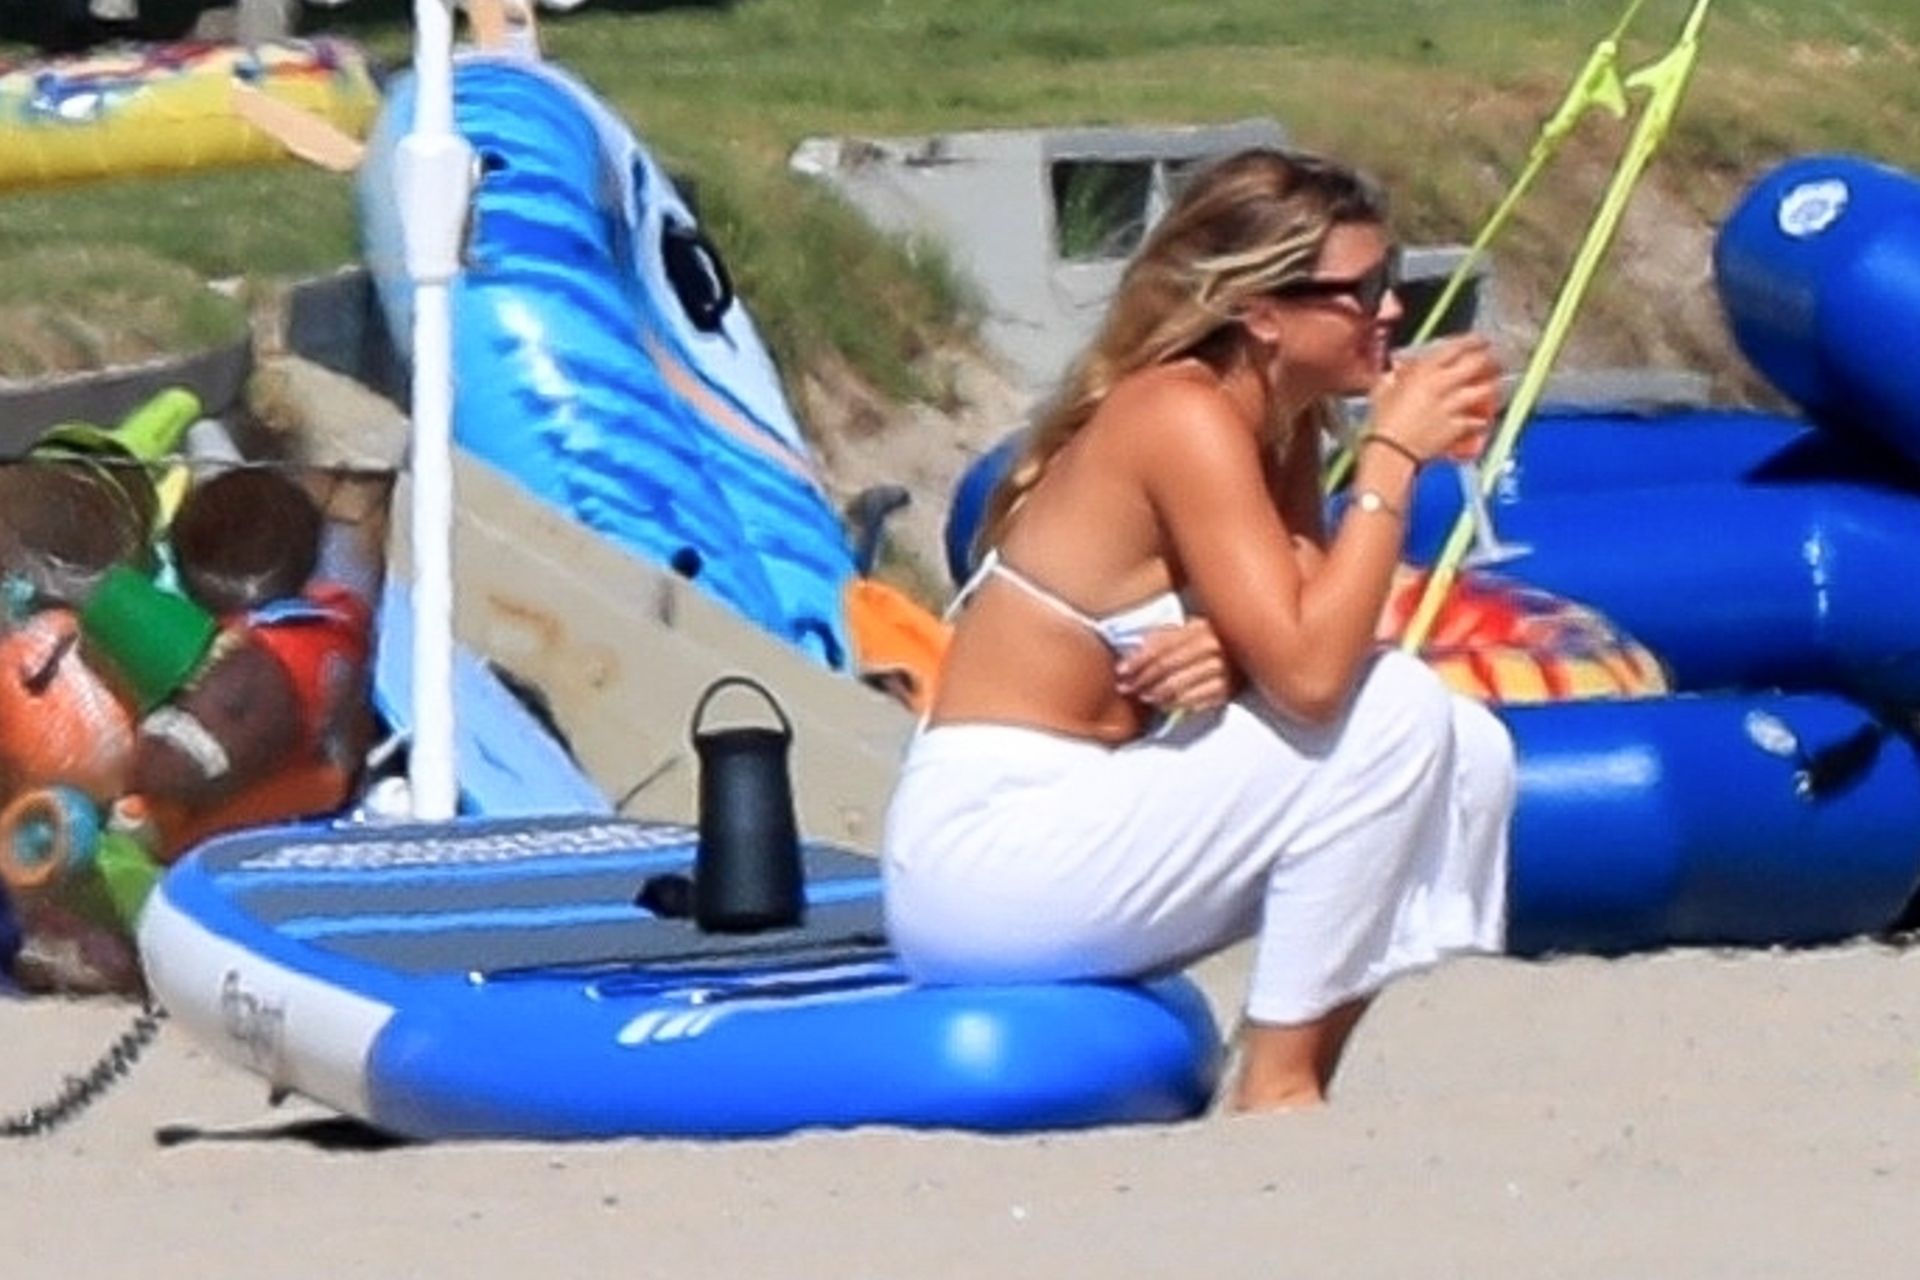 Sofia Richie Enjoys a Beach Day with Her Friends (83 Photos)